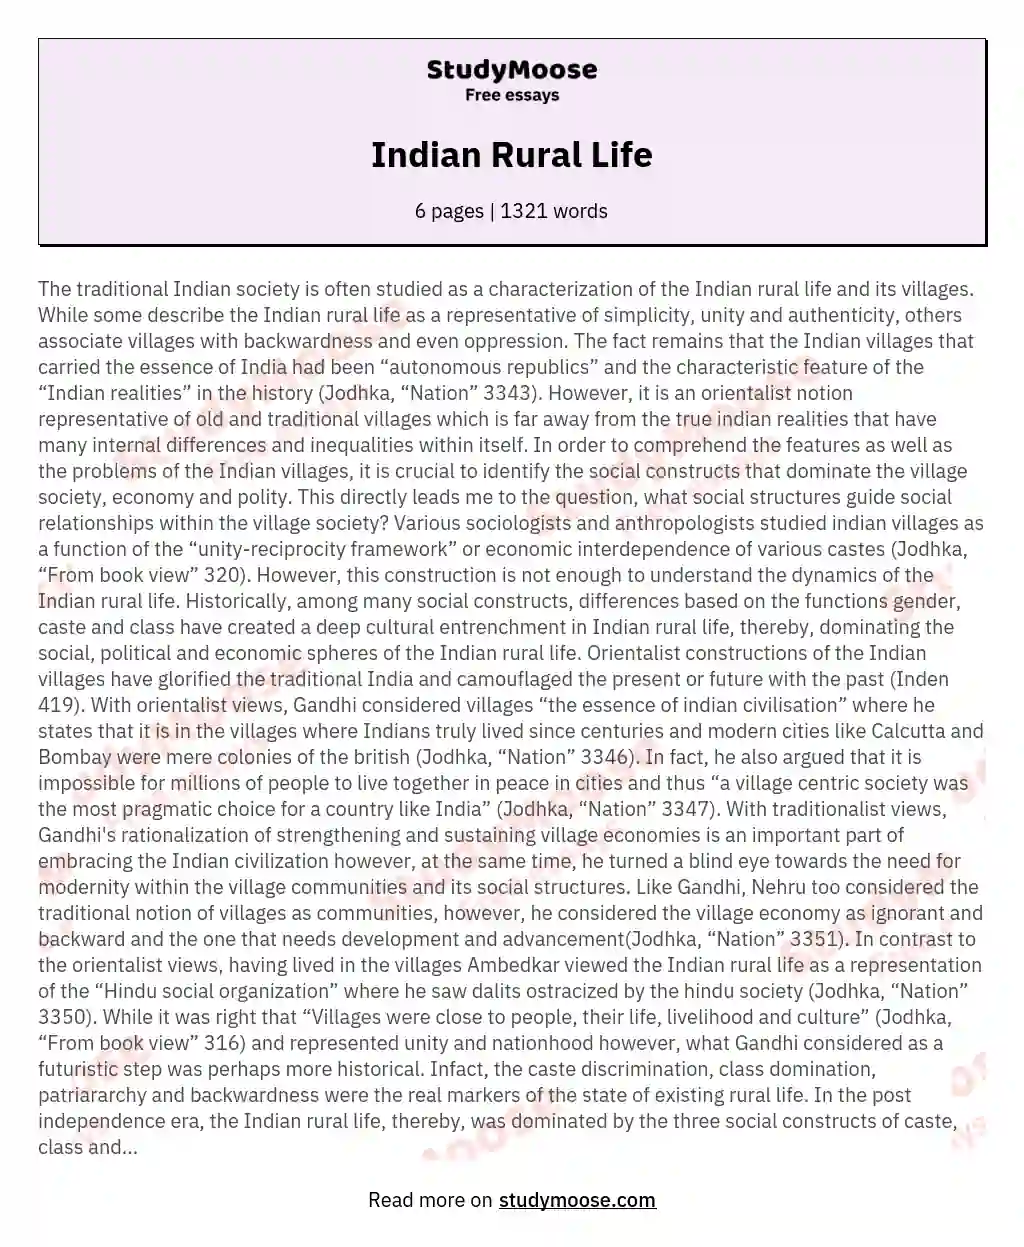 Indian Rural Life essay